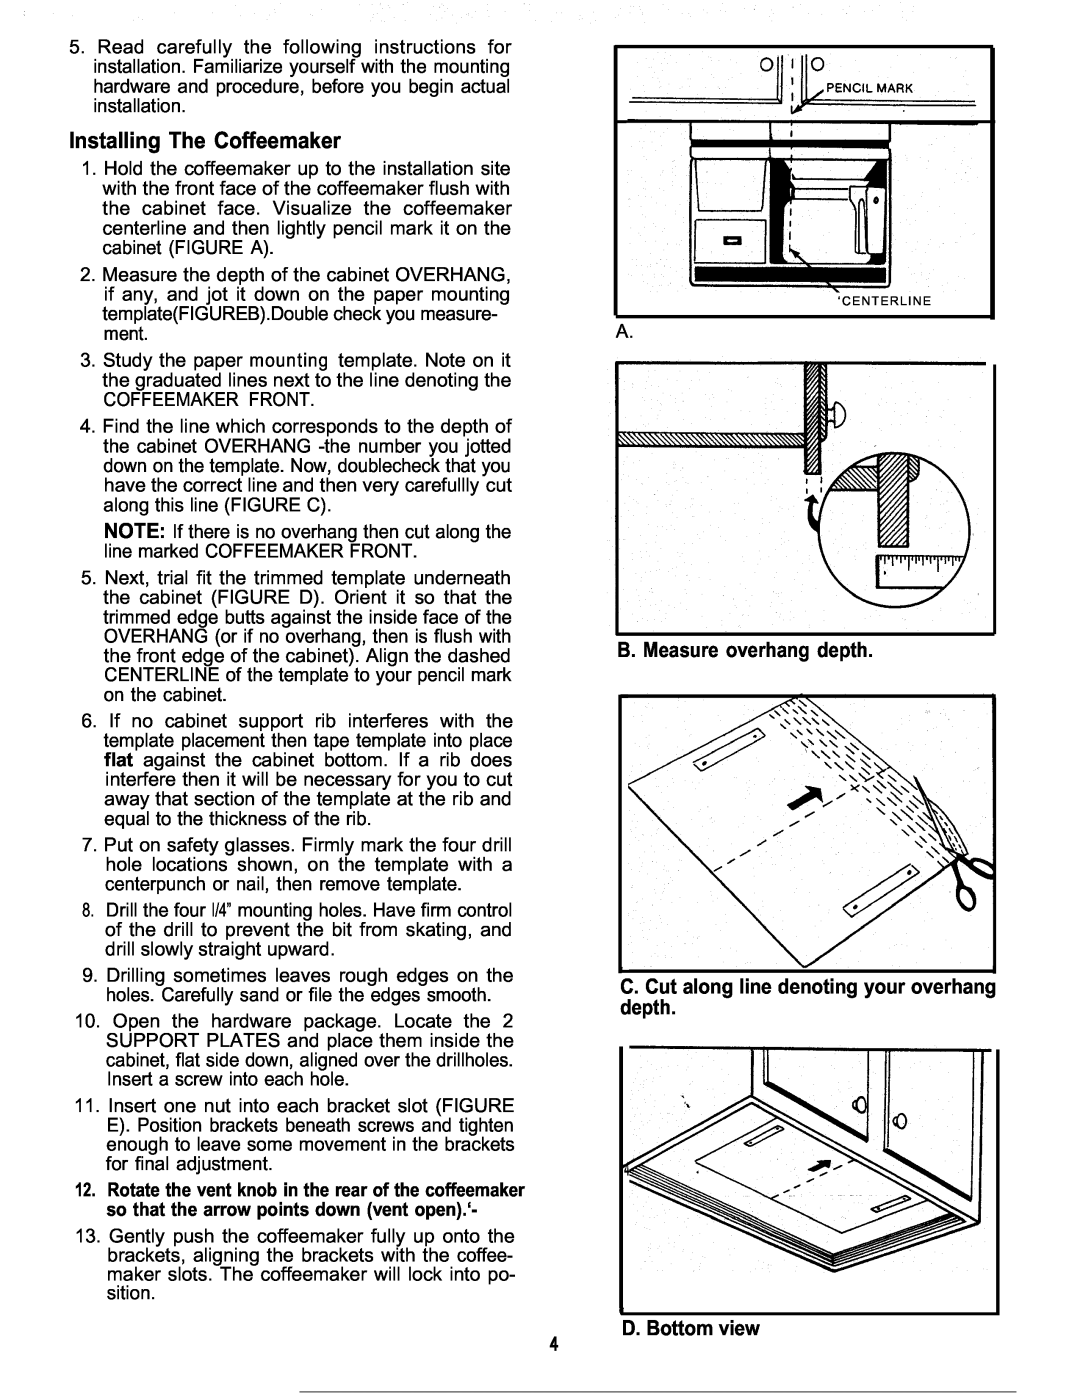 Mr. Coffee 403 Series manual Installing The Coffeemaker, B. Measure overhang depth, D. Bottom view 